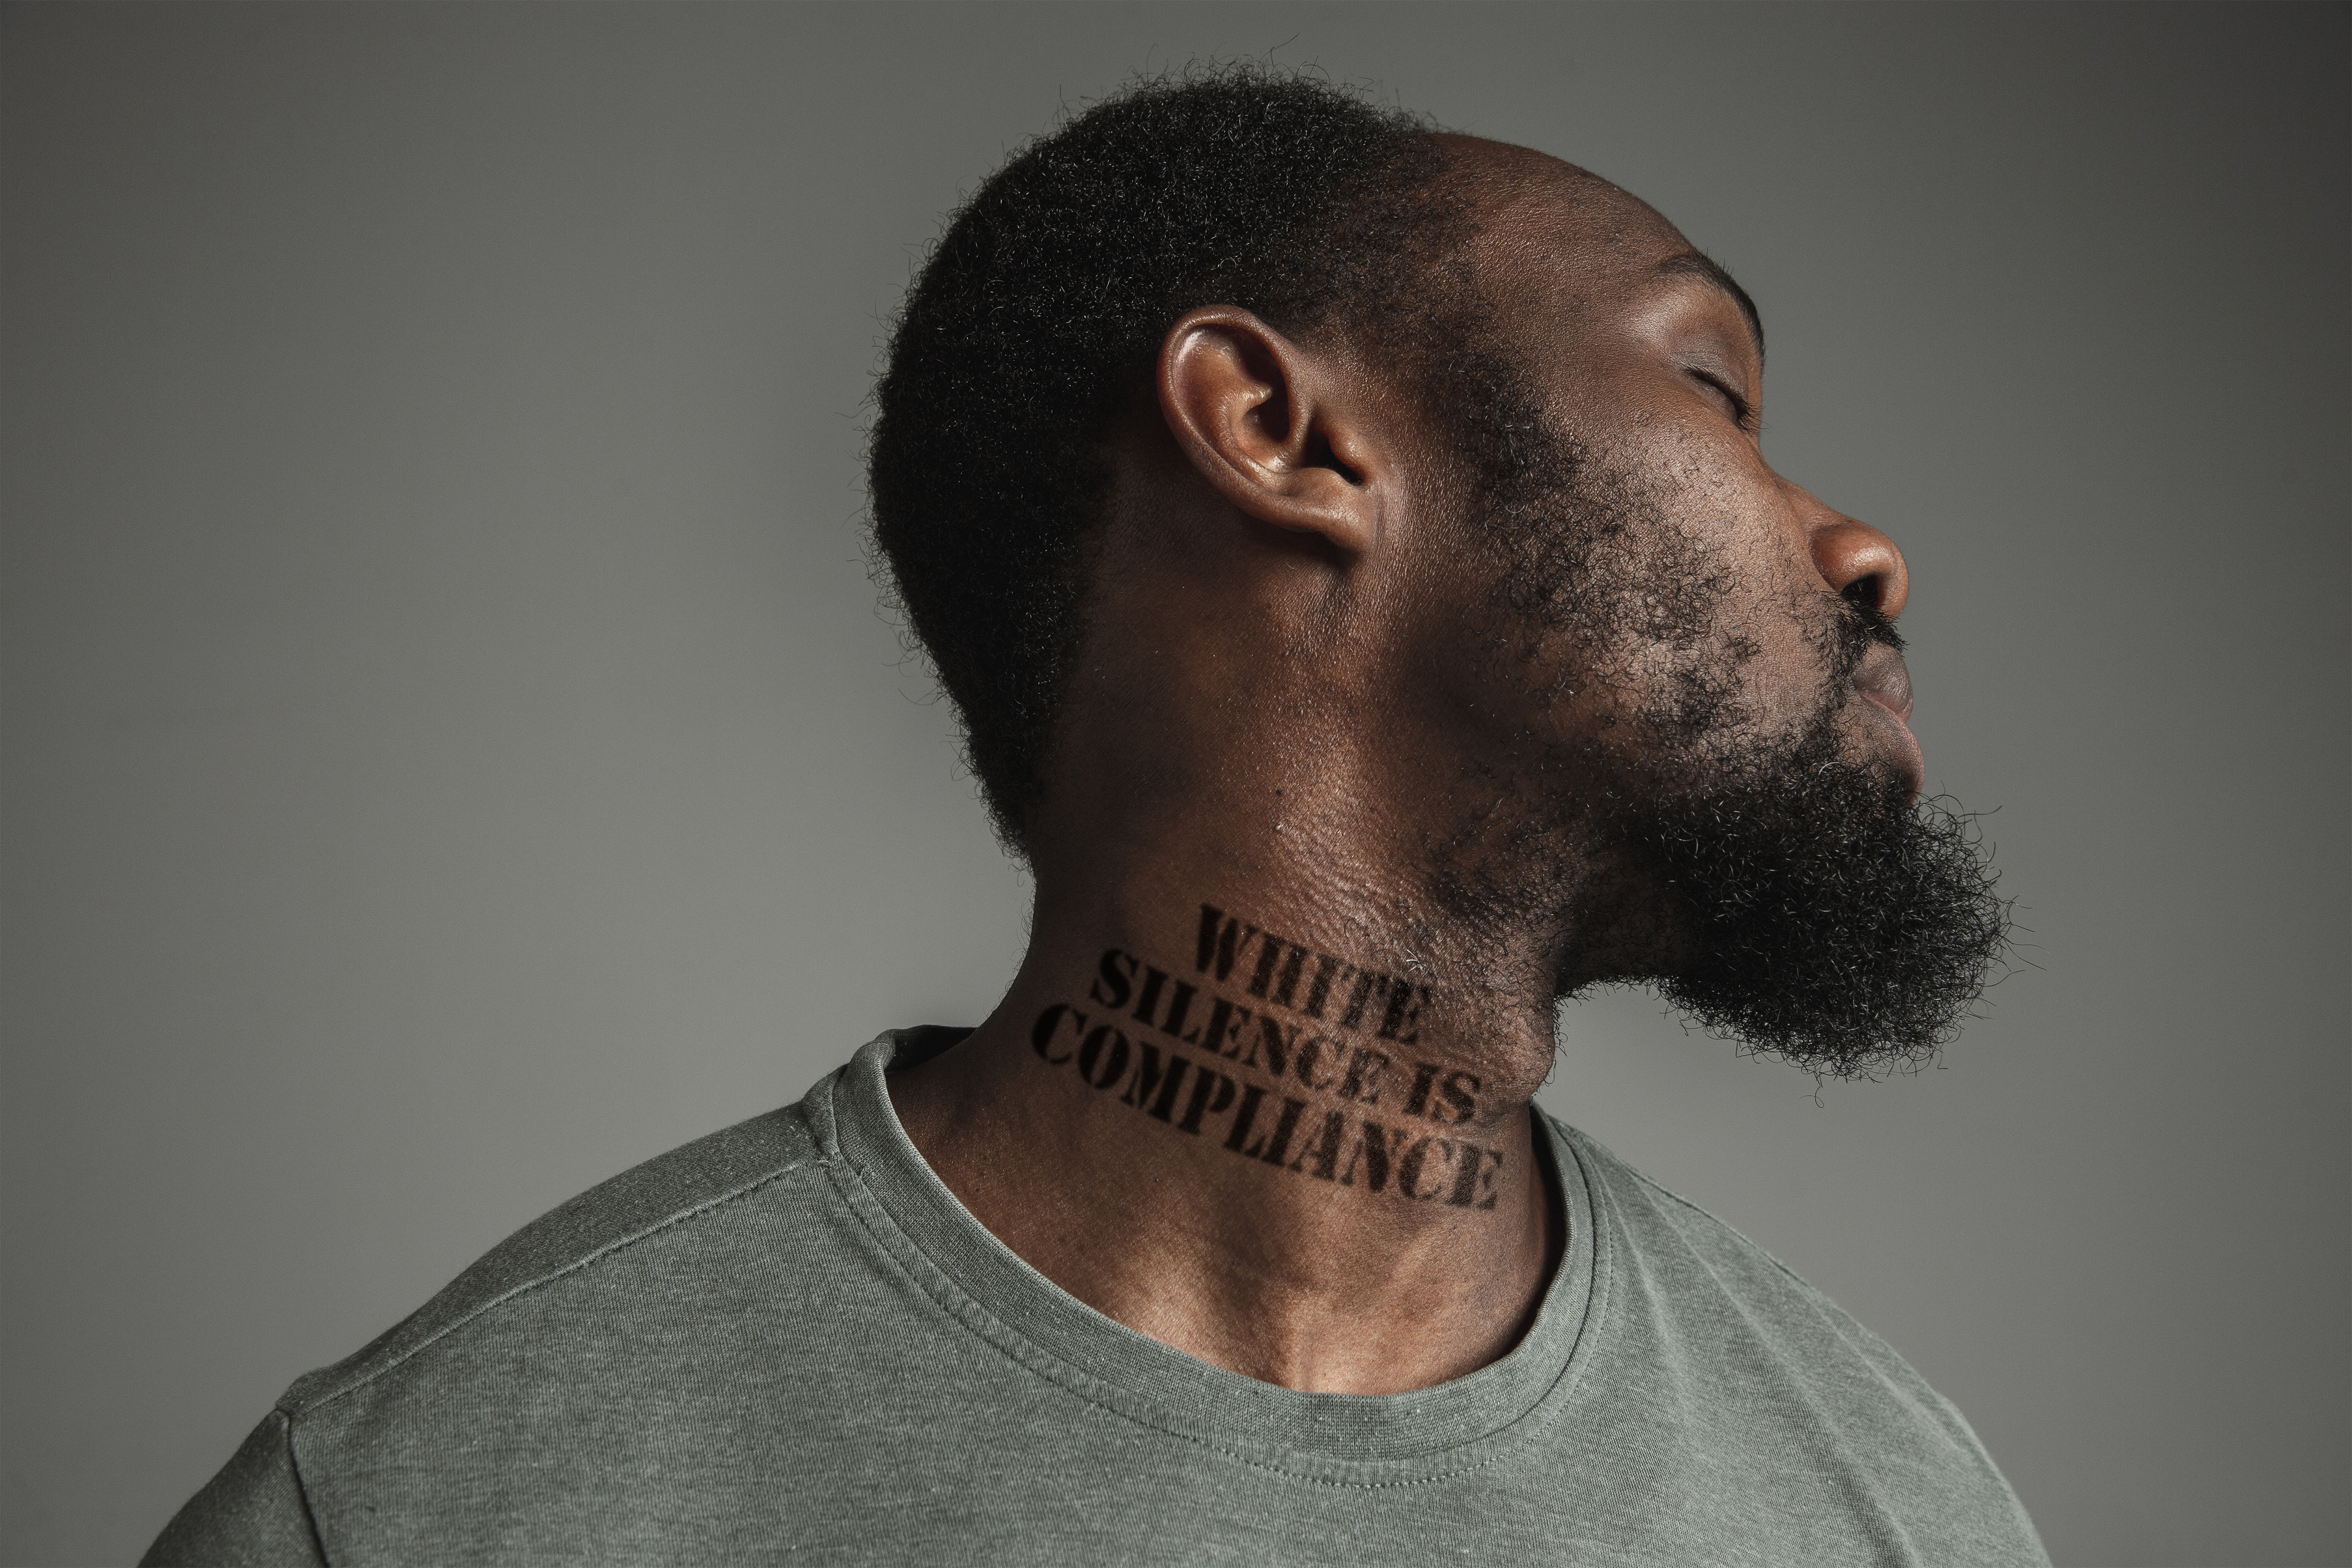 Black Lives Matter, White Silence is Compliance on Black Man's Neck